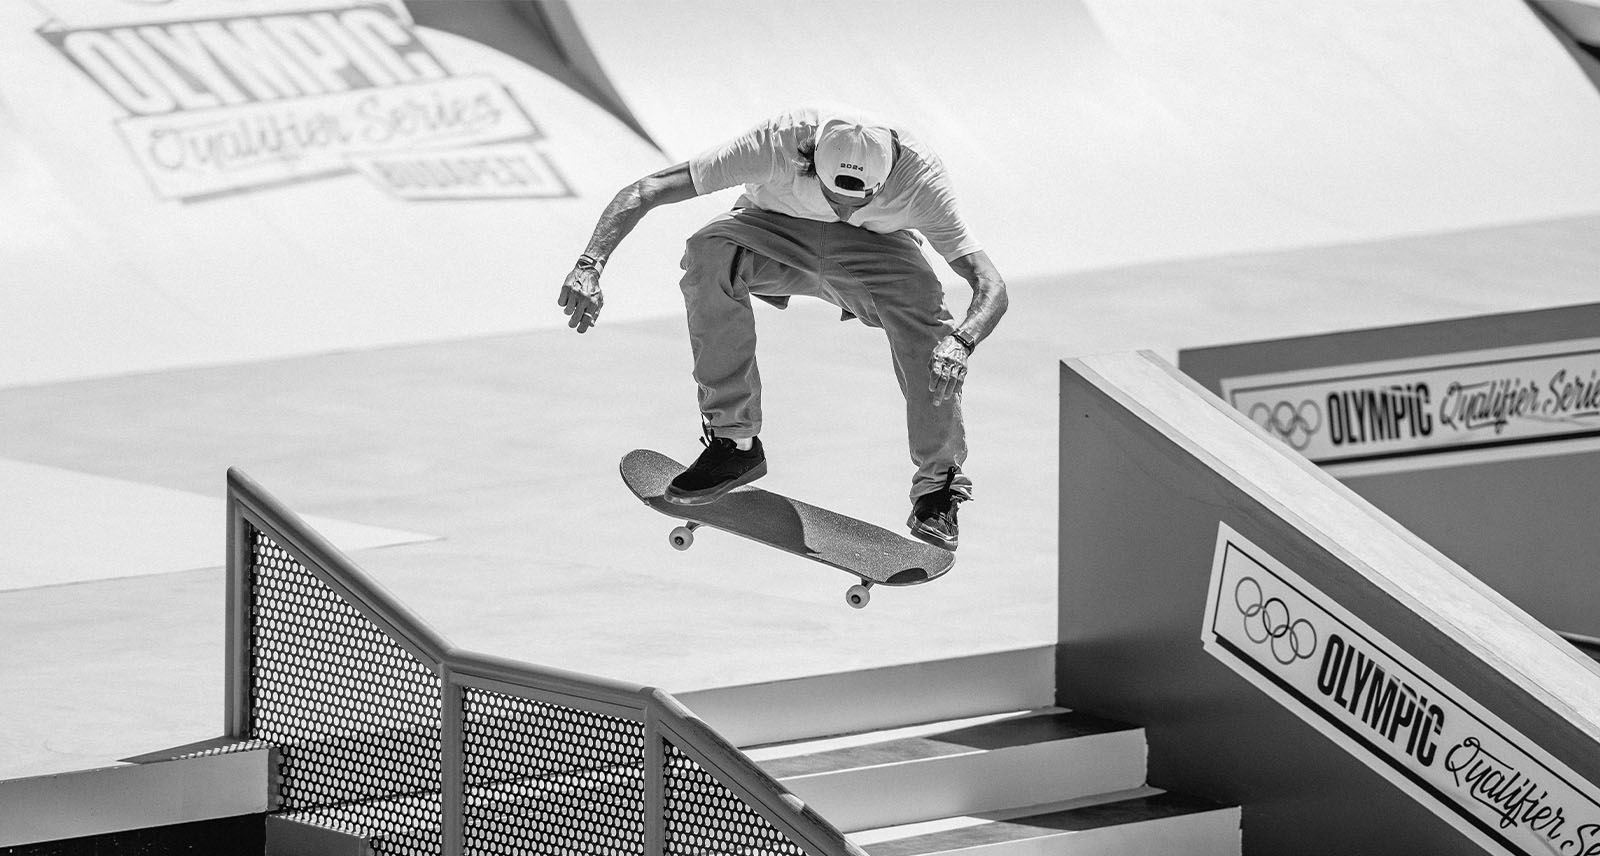 Ryan Decenzo skateboard interview for Paris Olympics